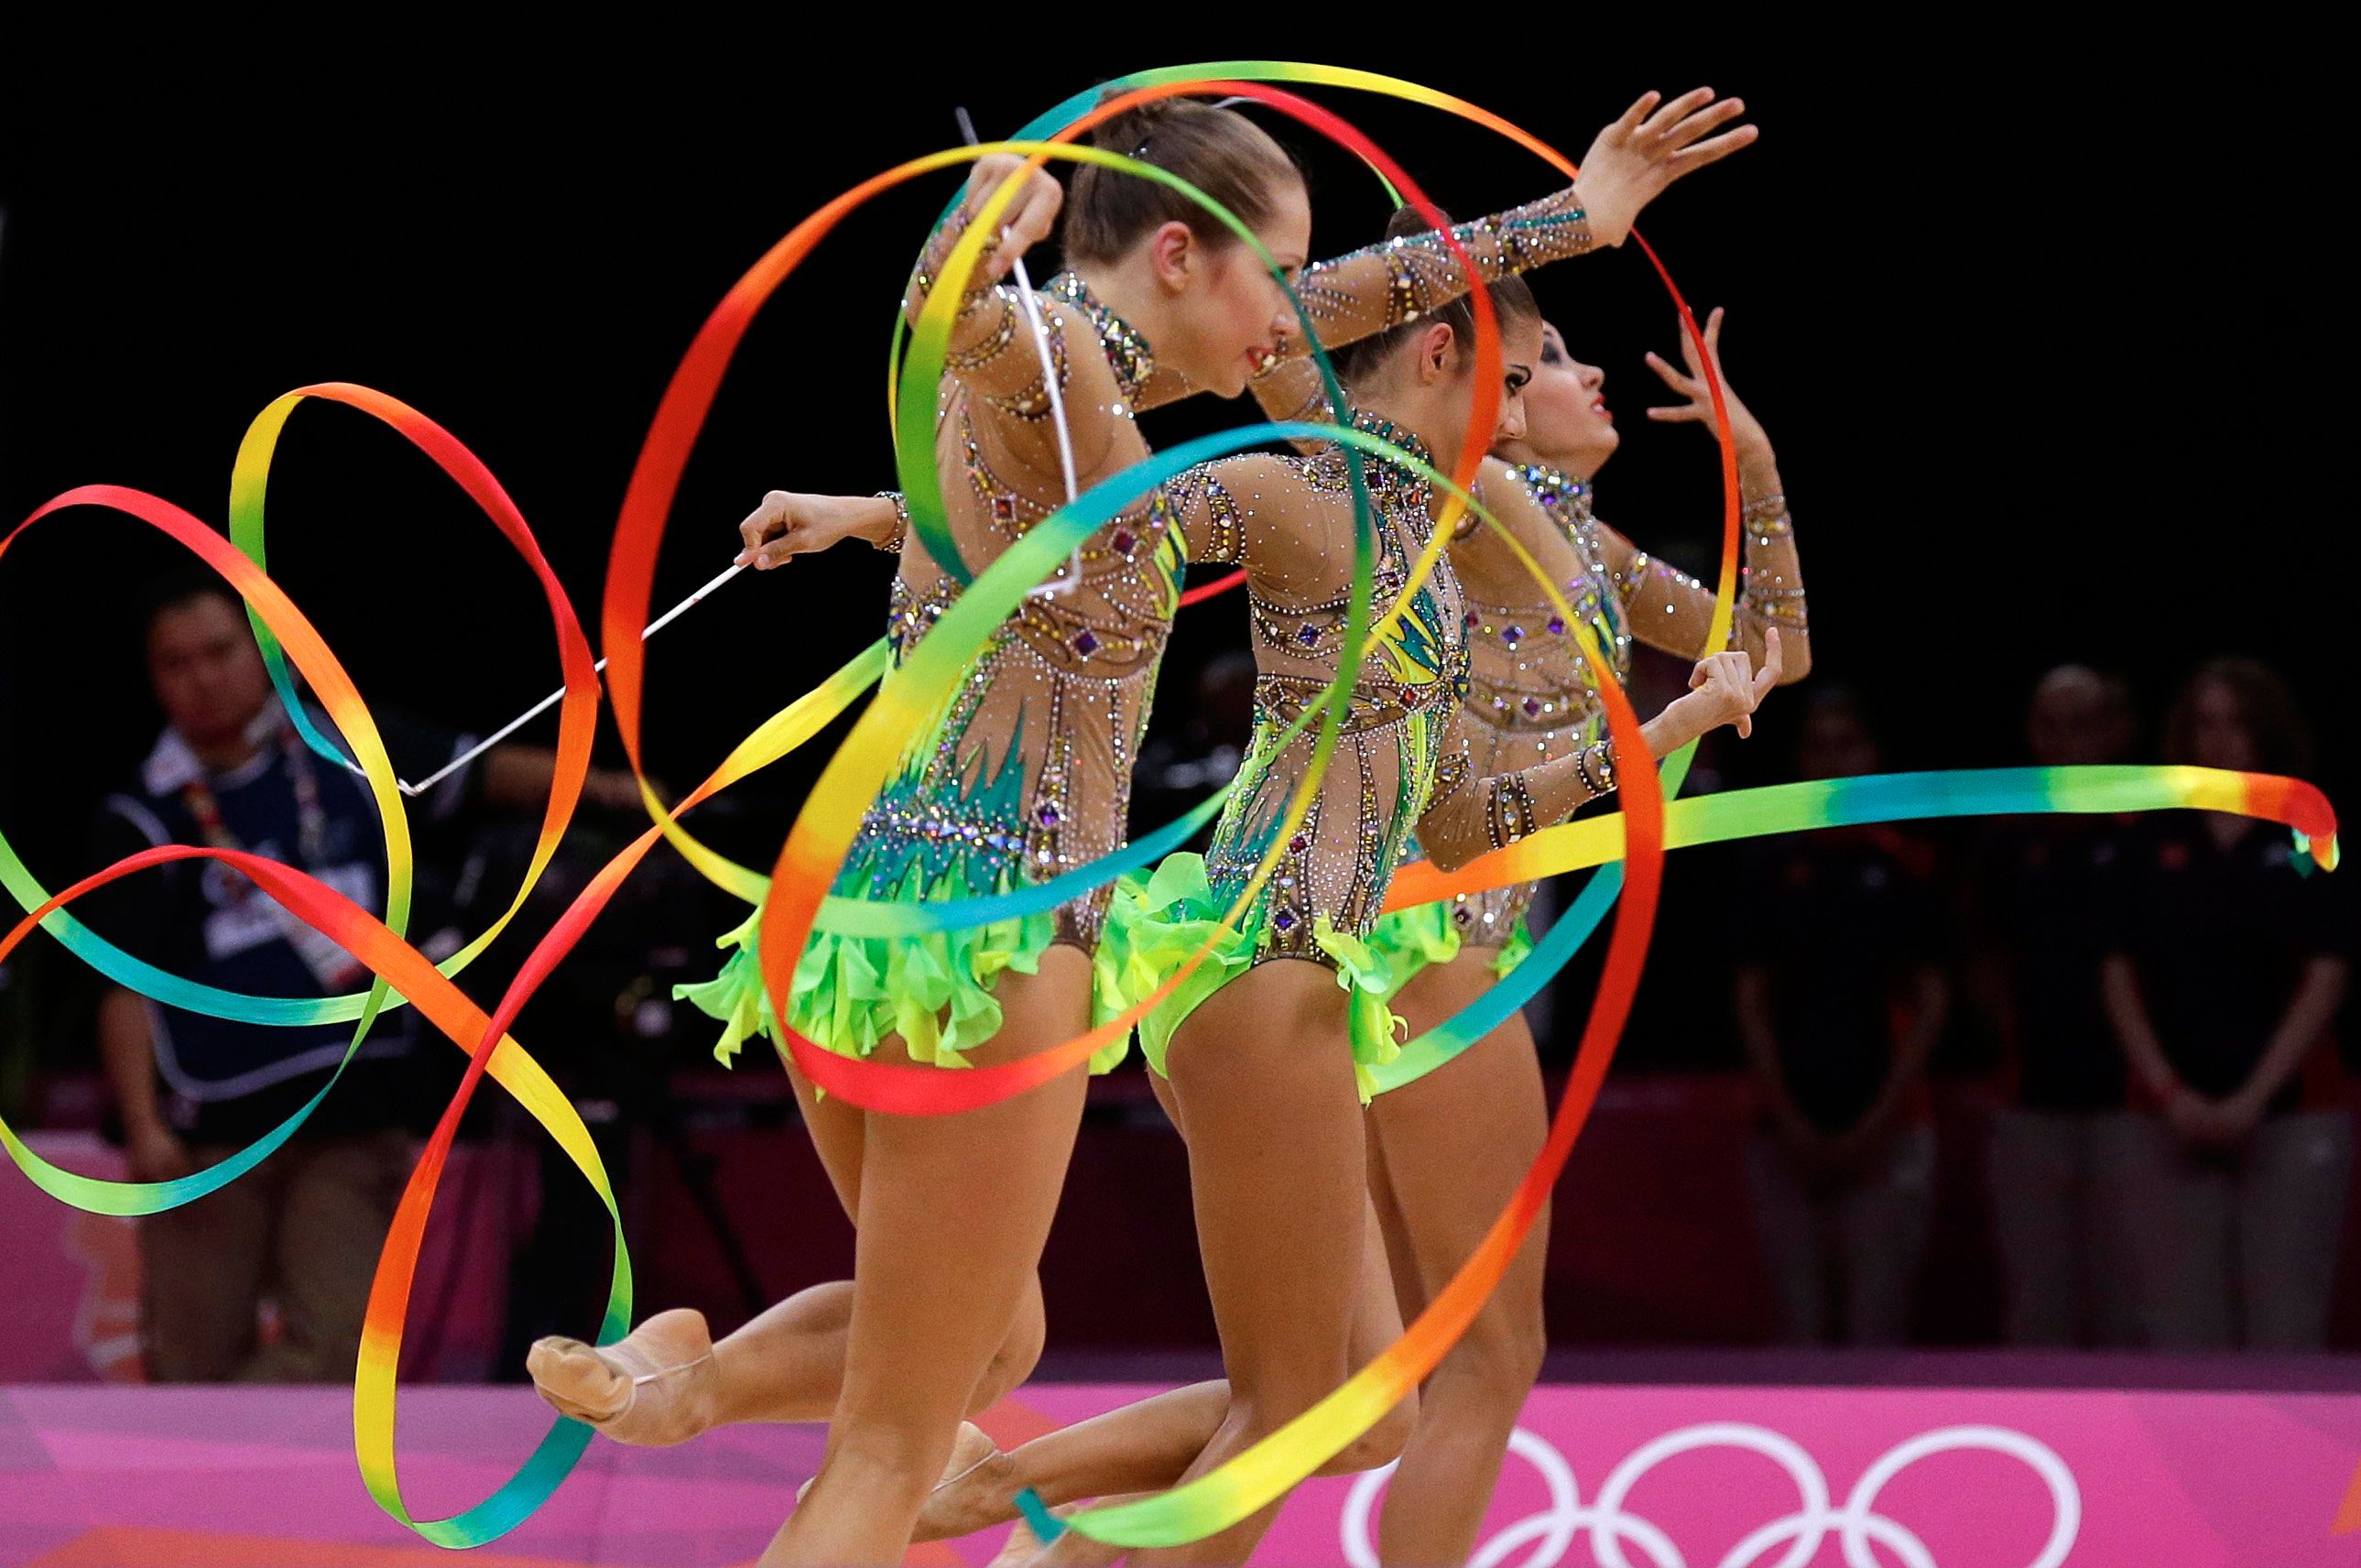 Fashion fans will dig the Olympics rhythmic gymnastics The Seattle Times